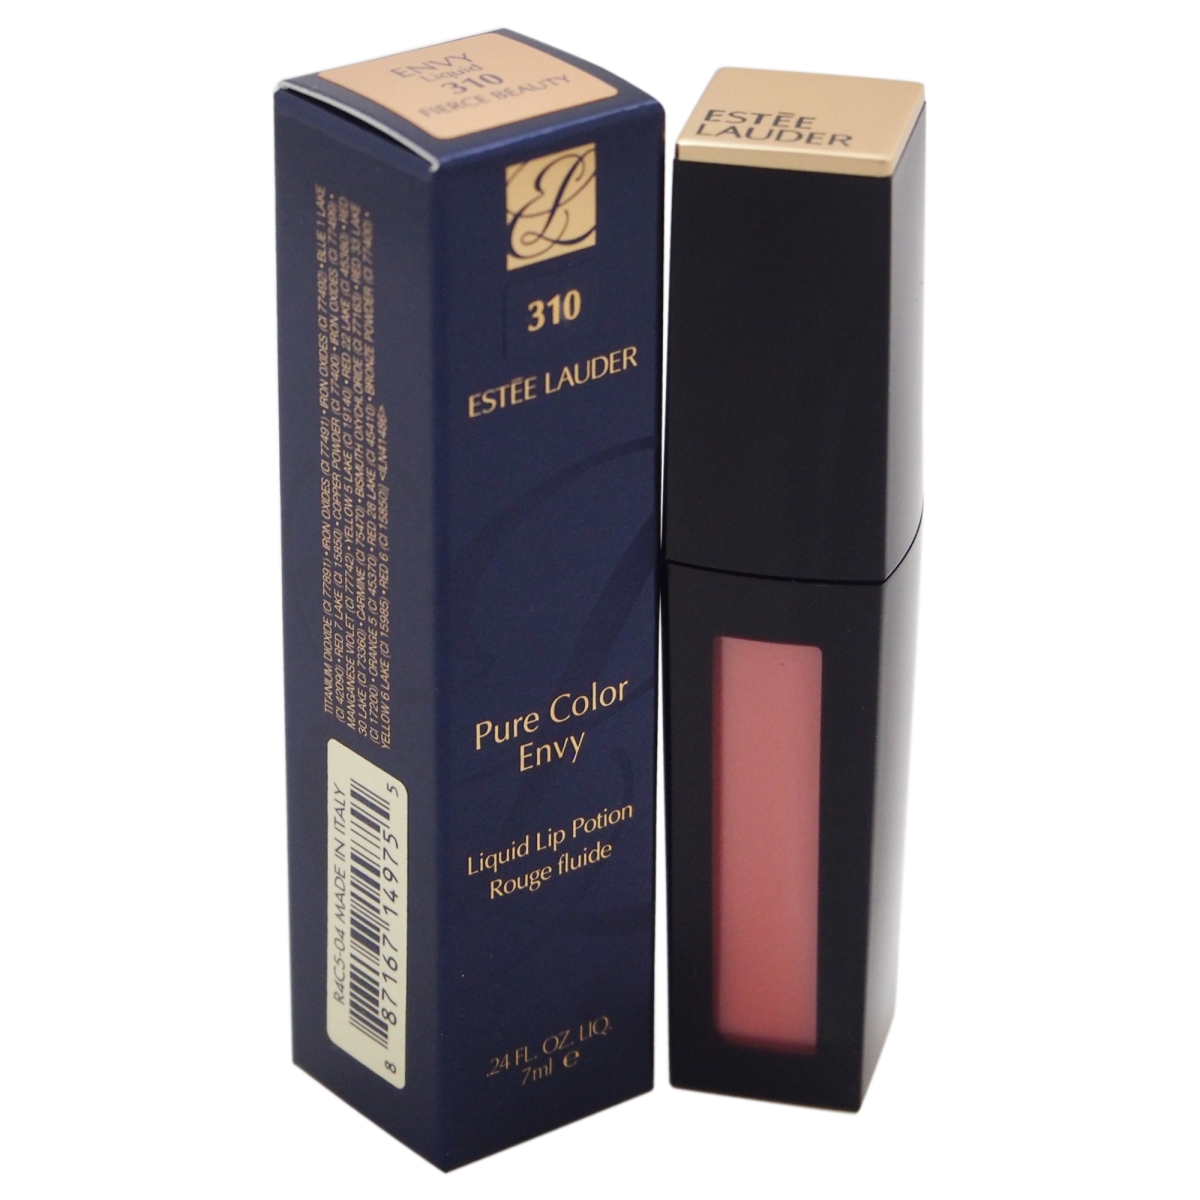 W-c-8572 0.24 Oz No. 310 Pure Color Envy Liquid Fierce Beauty Lip Gloss For Women